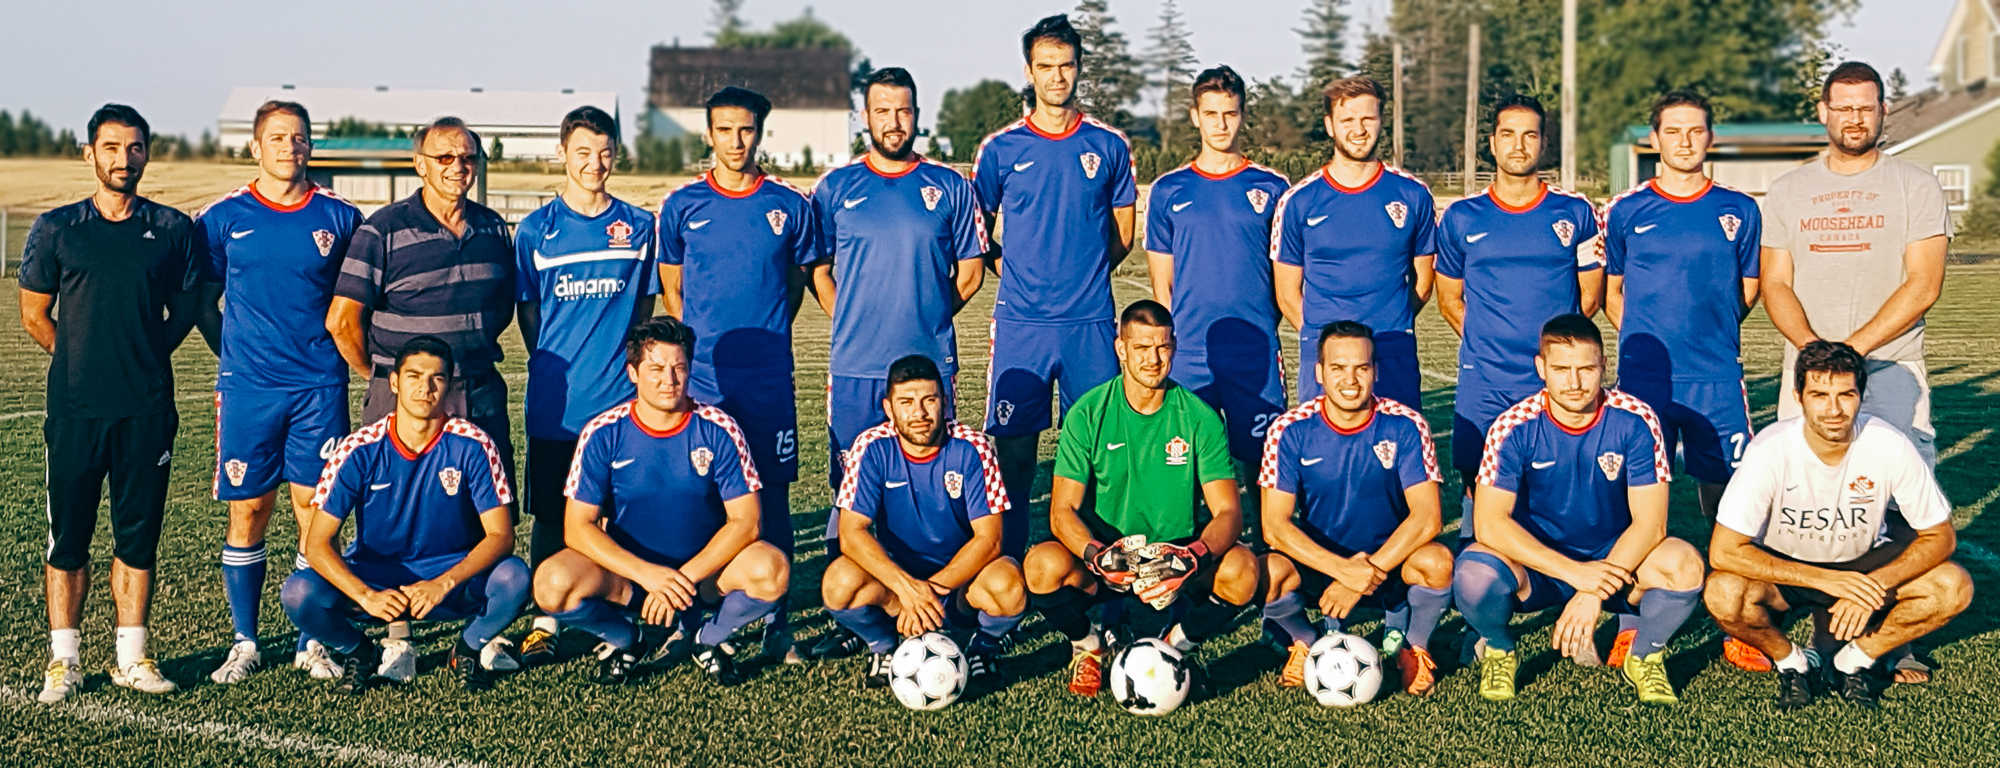 London - St. Thomas Croatia Soccer Club